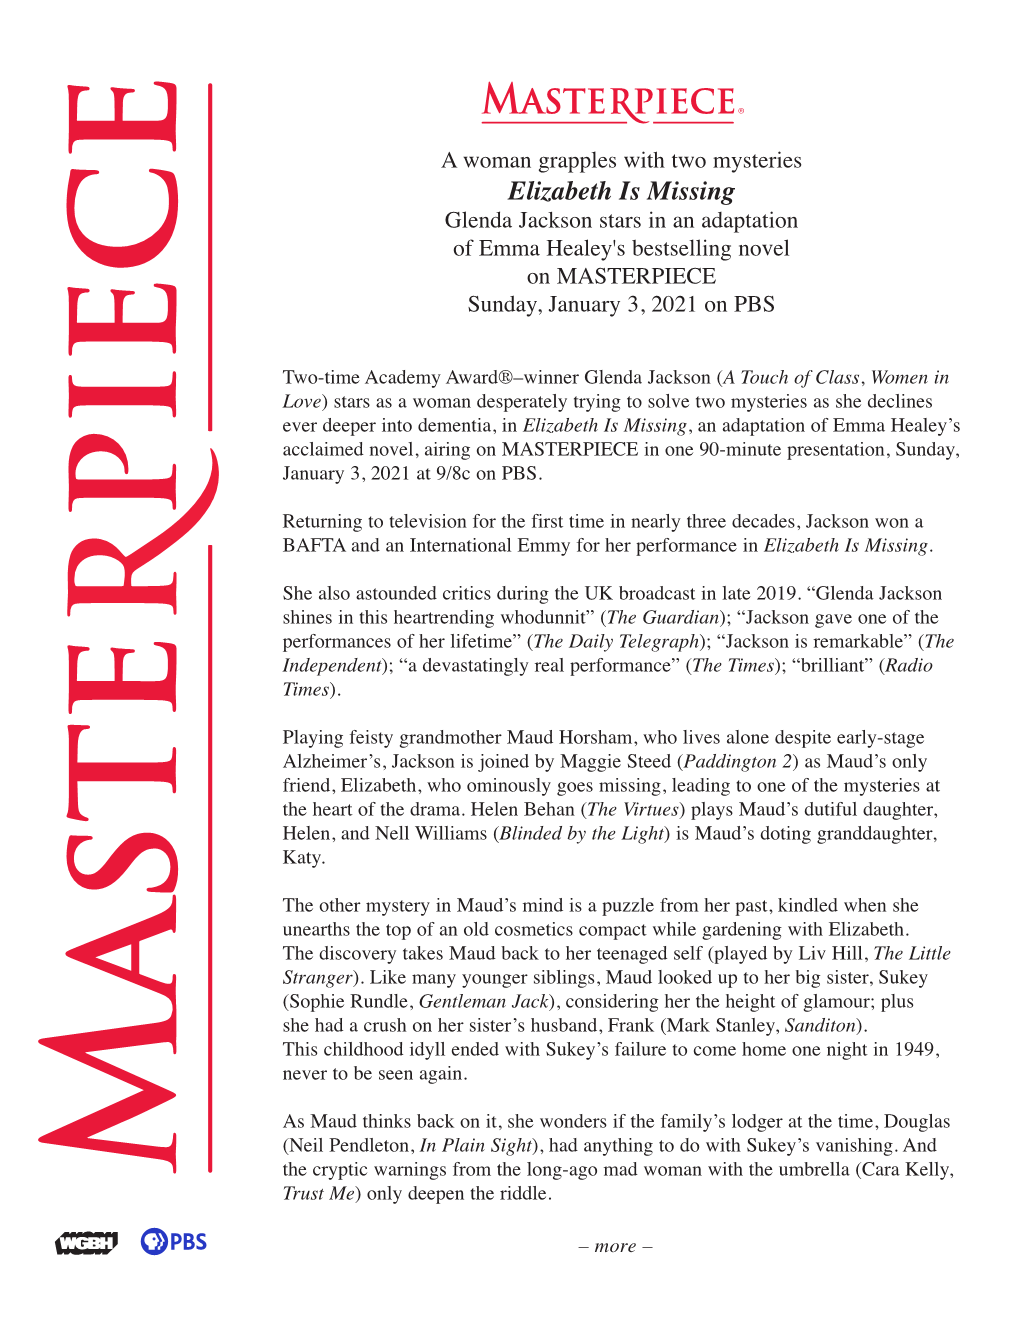 Elizabeth Is Missing Glenda Jackson Stars in an Adaptation of Emma Healey's Bestselling Novel on MASTERPIECE Sunday, January 3, 2021 on PBS